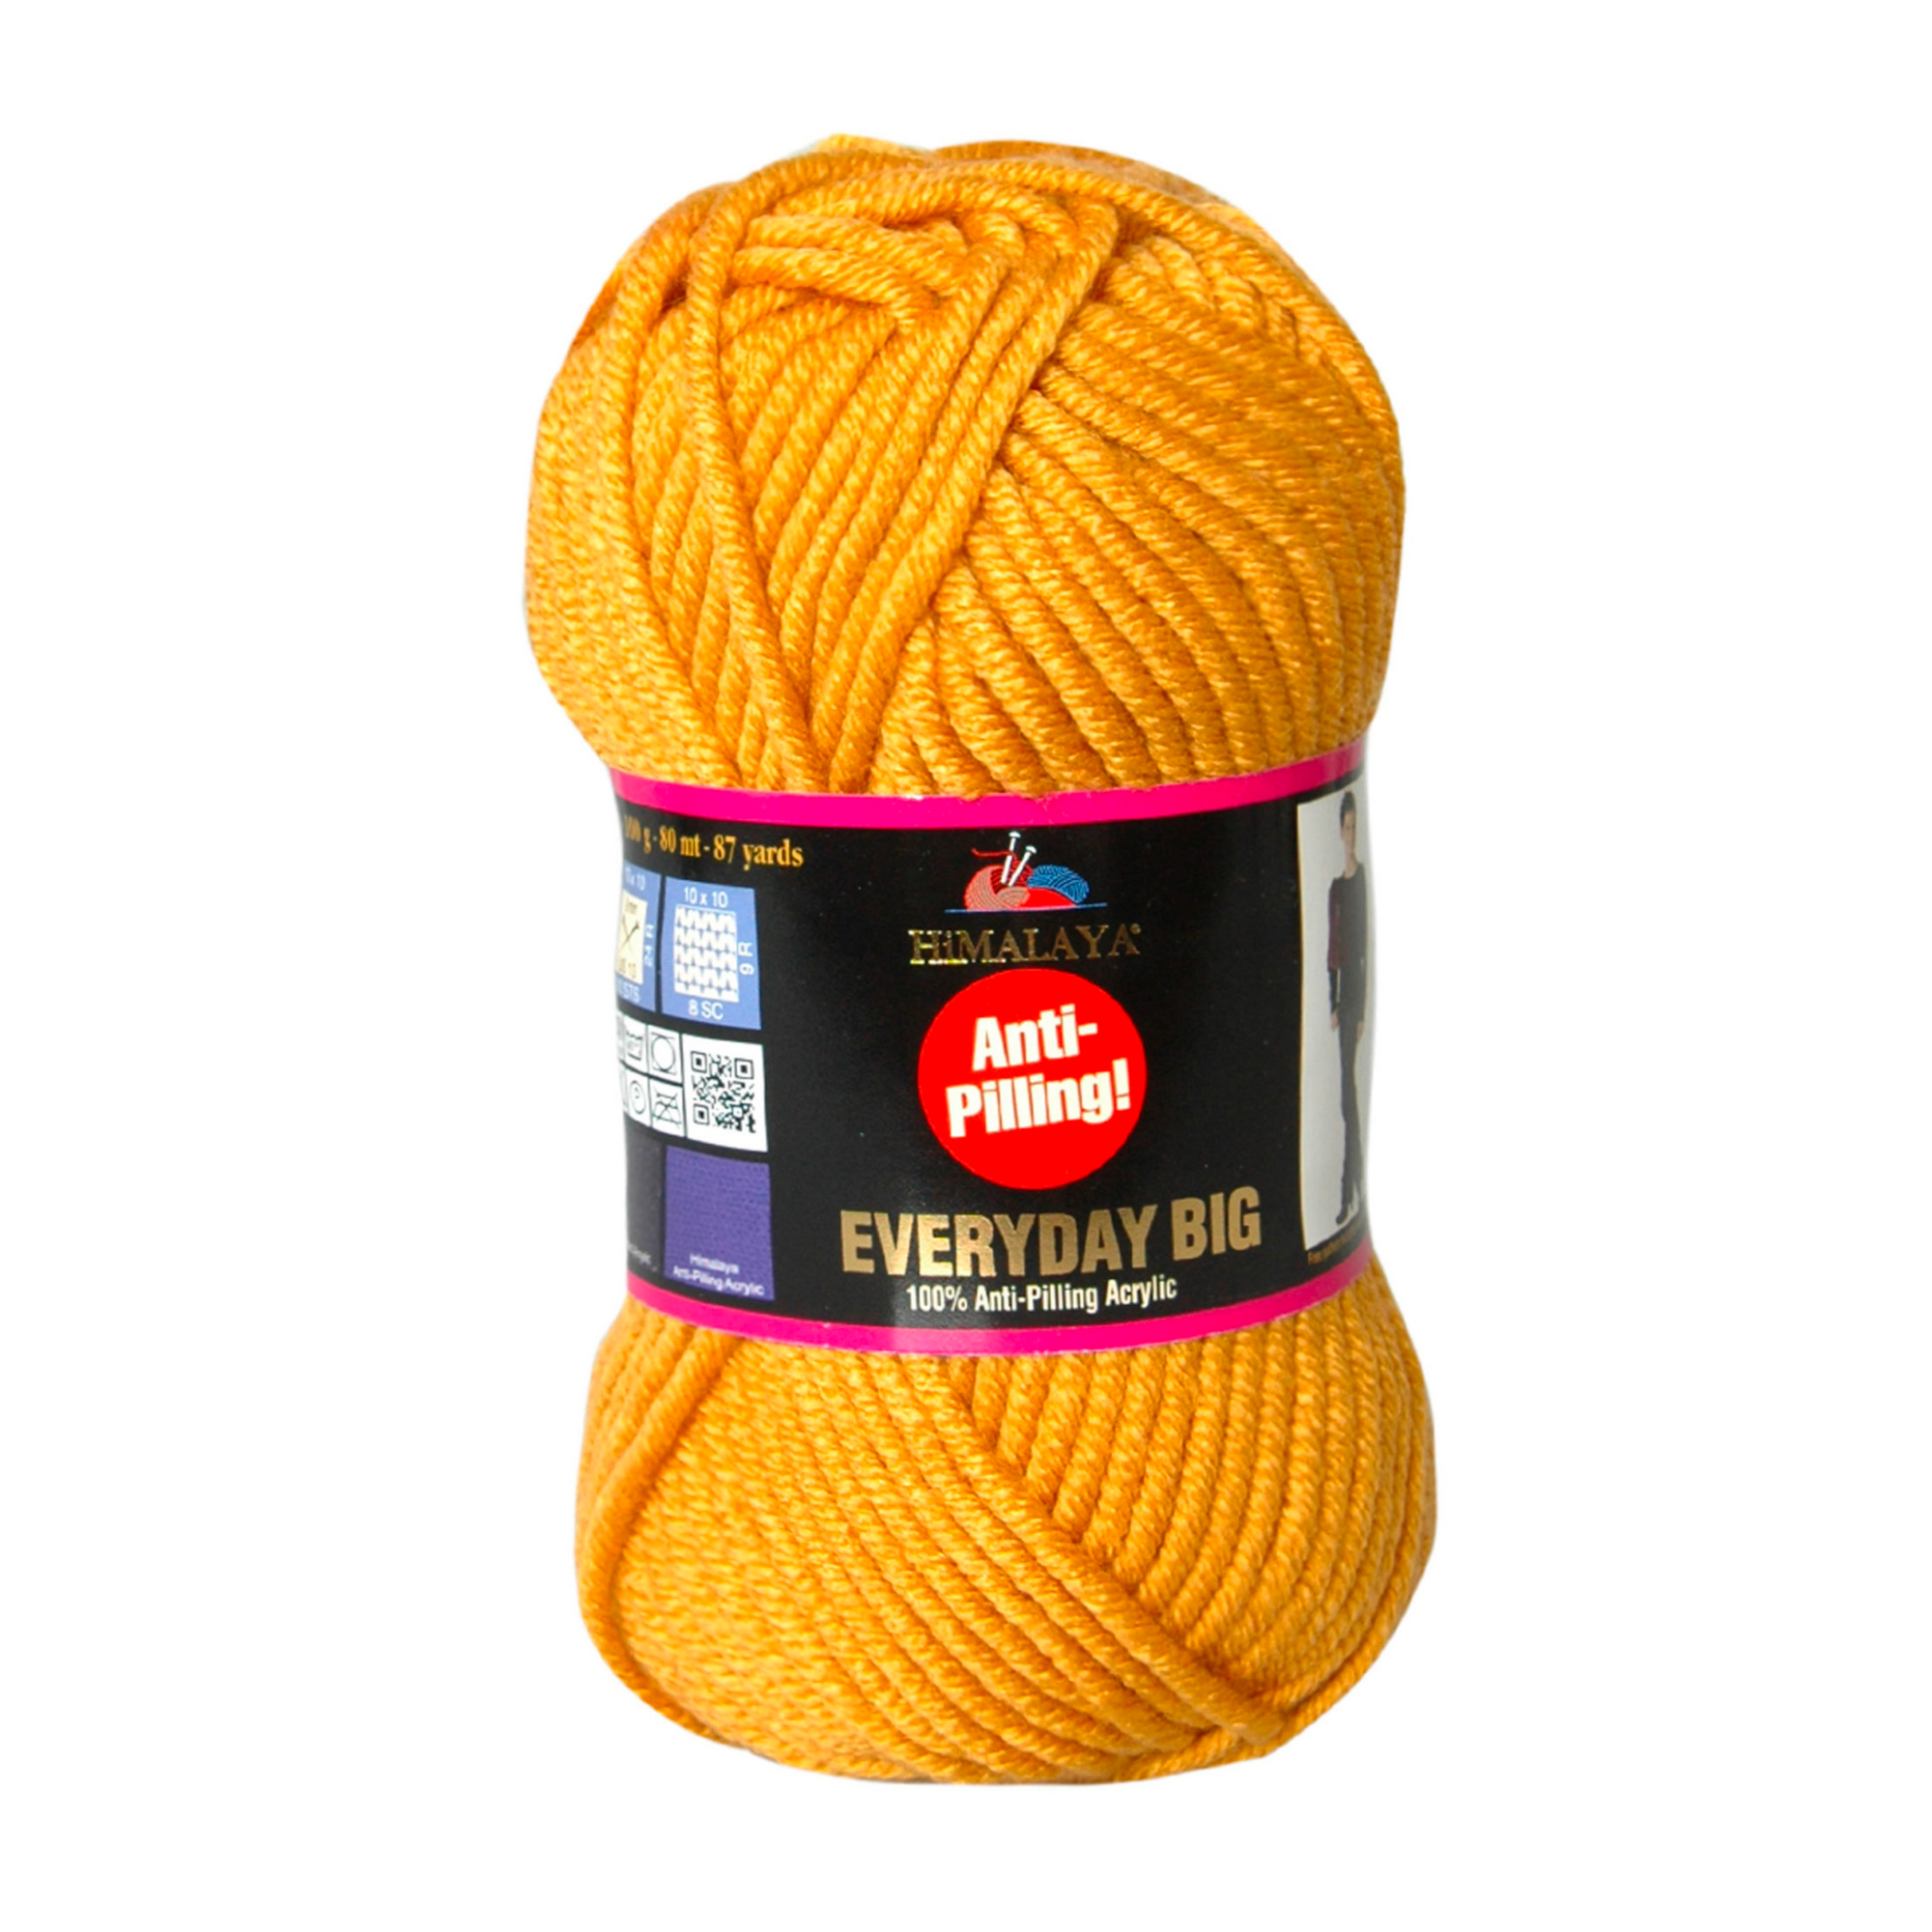 Himalaya Everyday 100% Anti-Pilling Acrylic Yarn, Brown - 70830